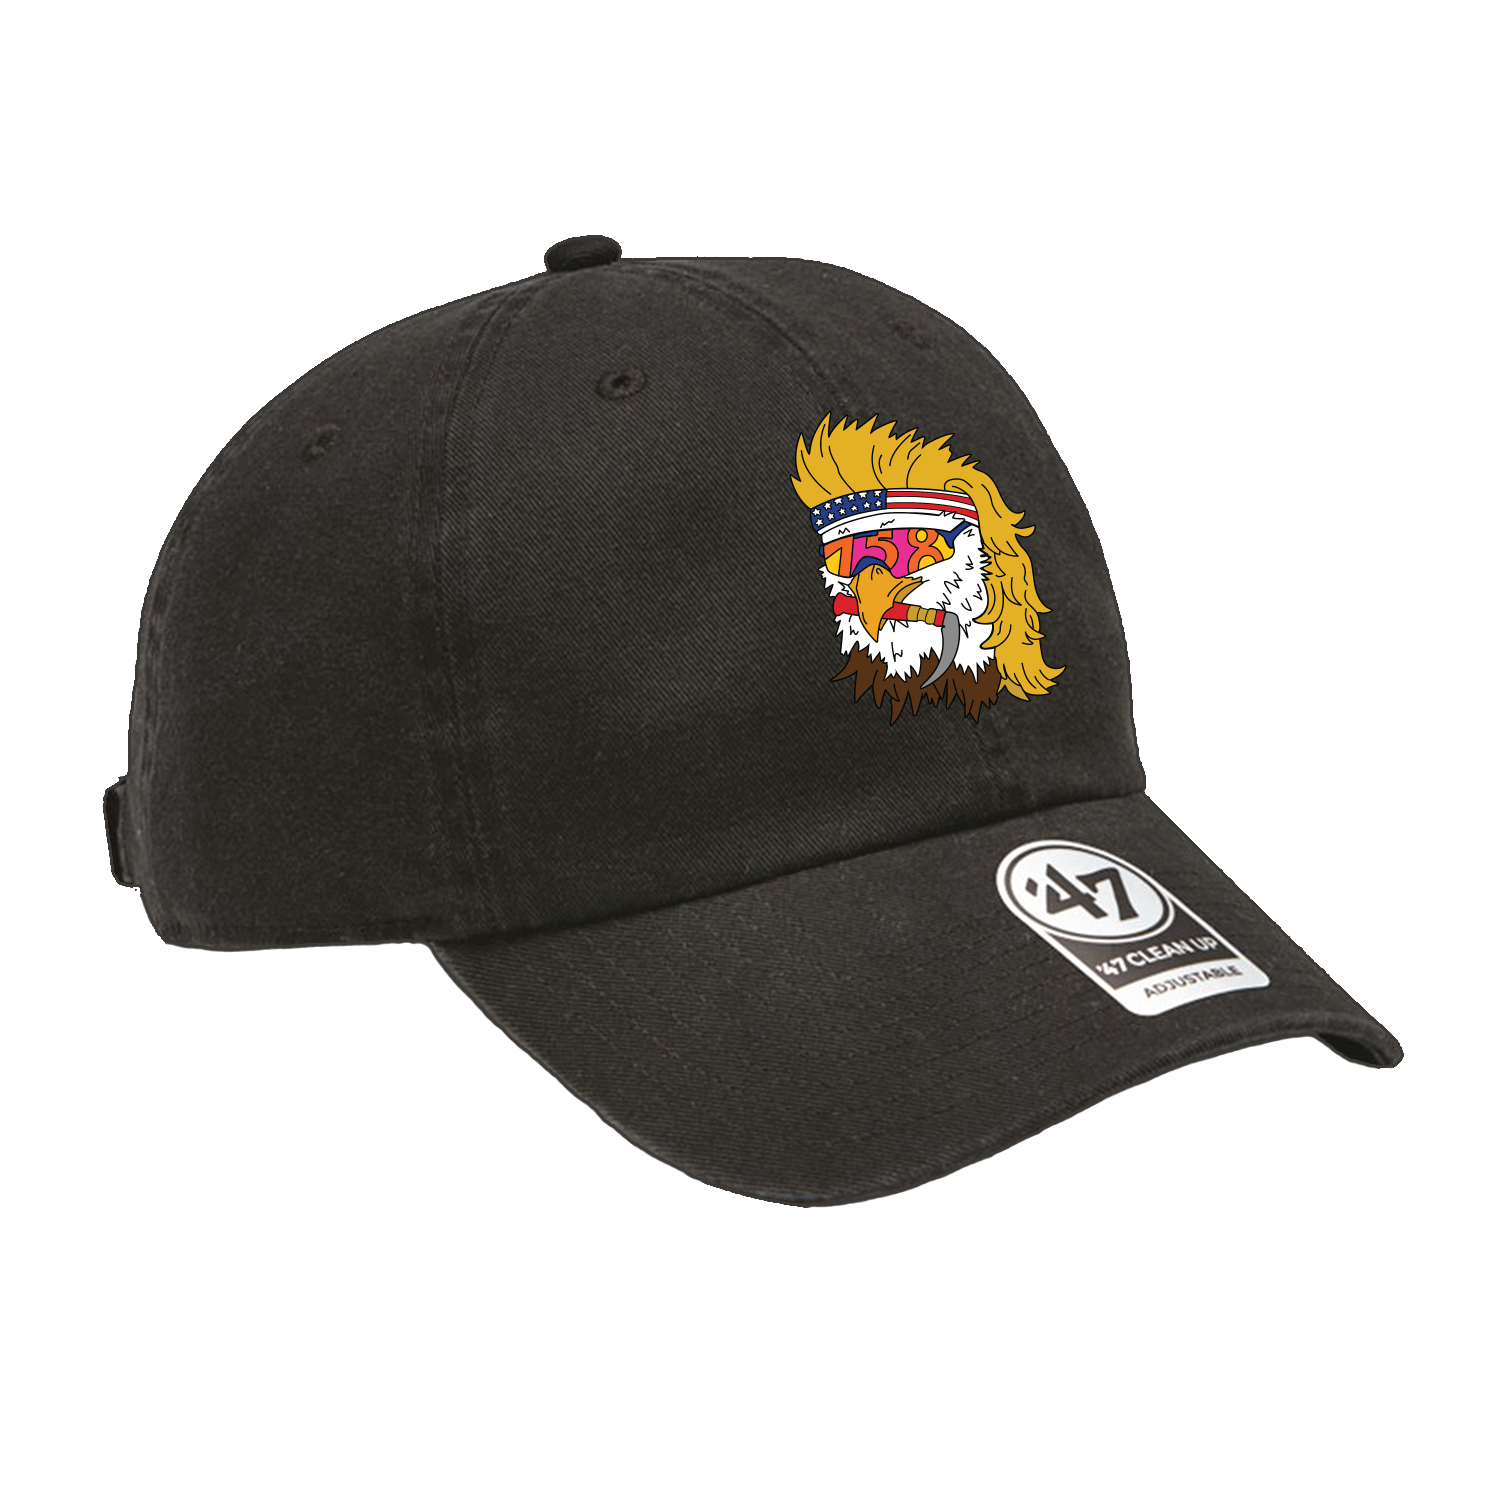 758 FRSD Hats  Brotallion – Brotallion LLC